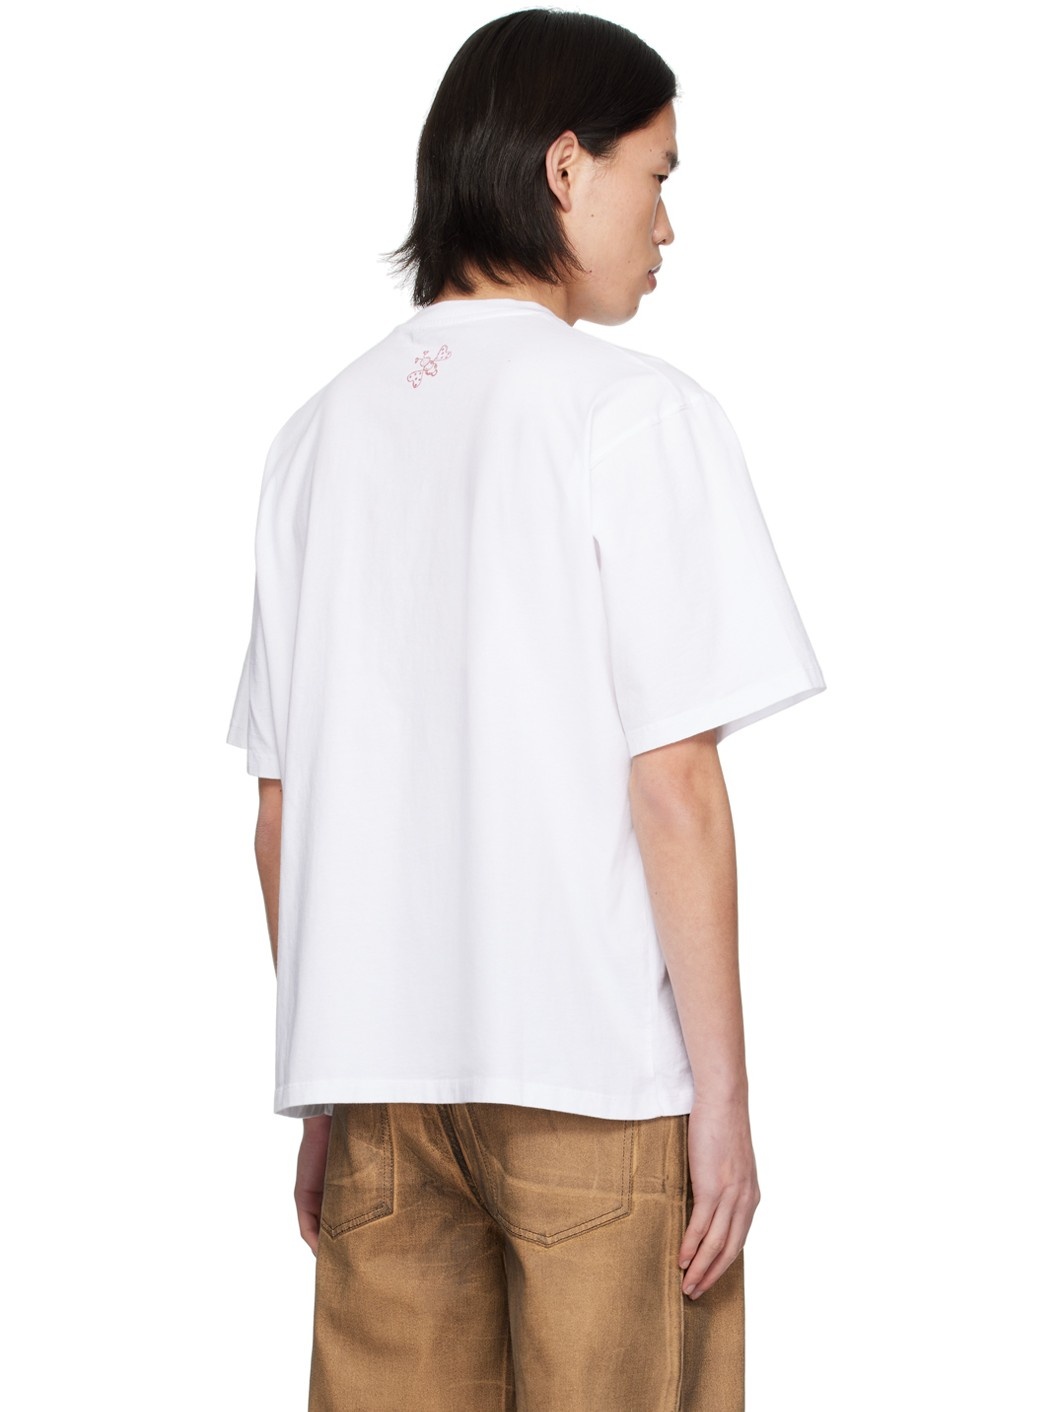 White Printed T-Shirt - 3